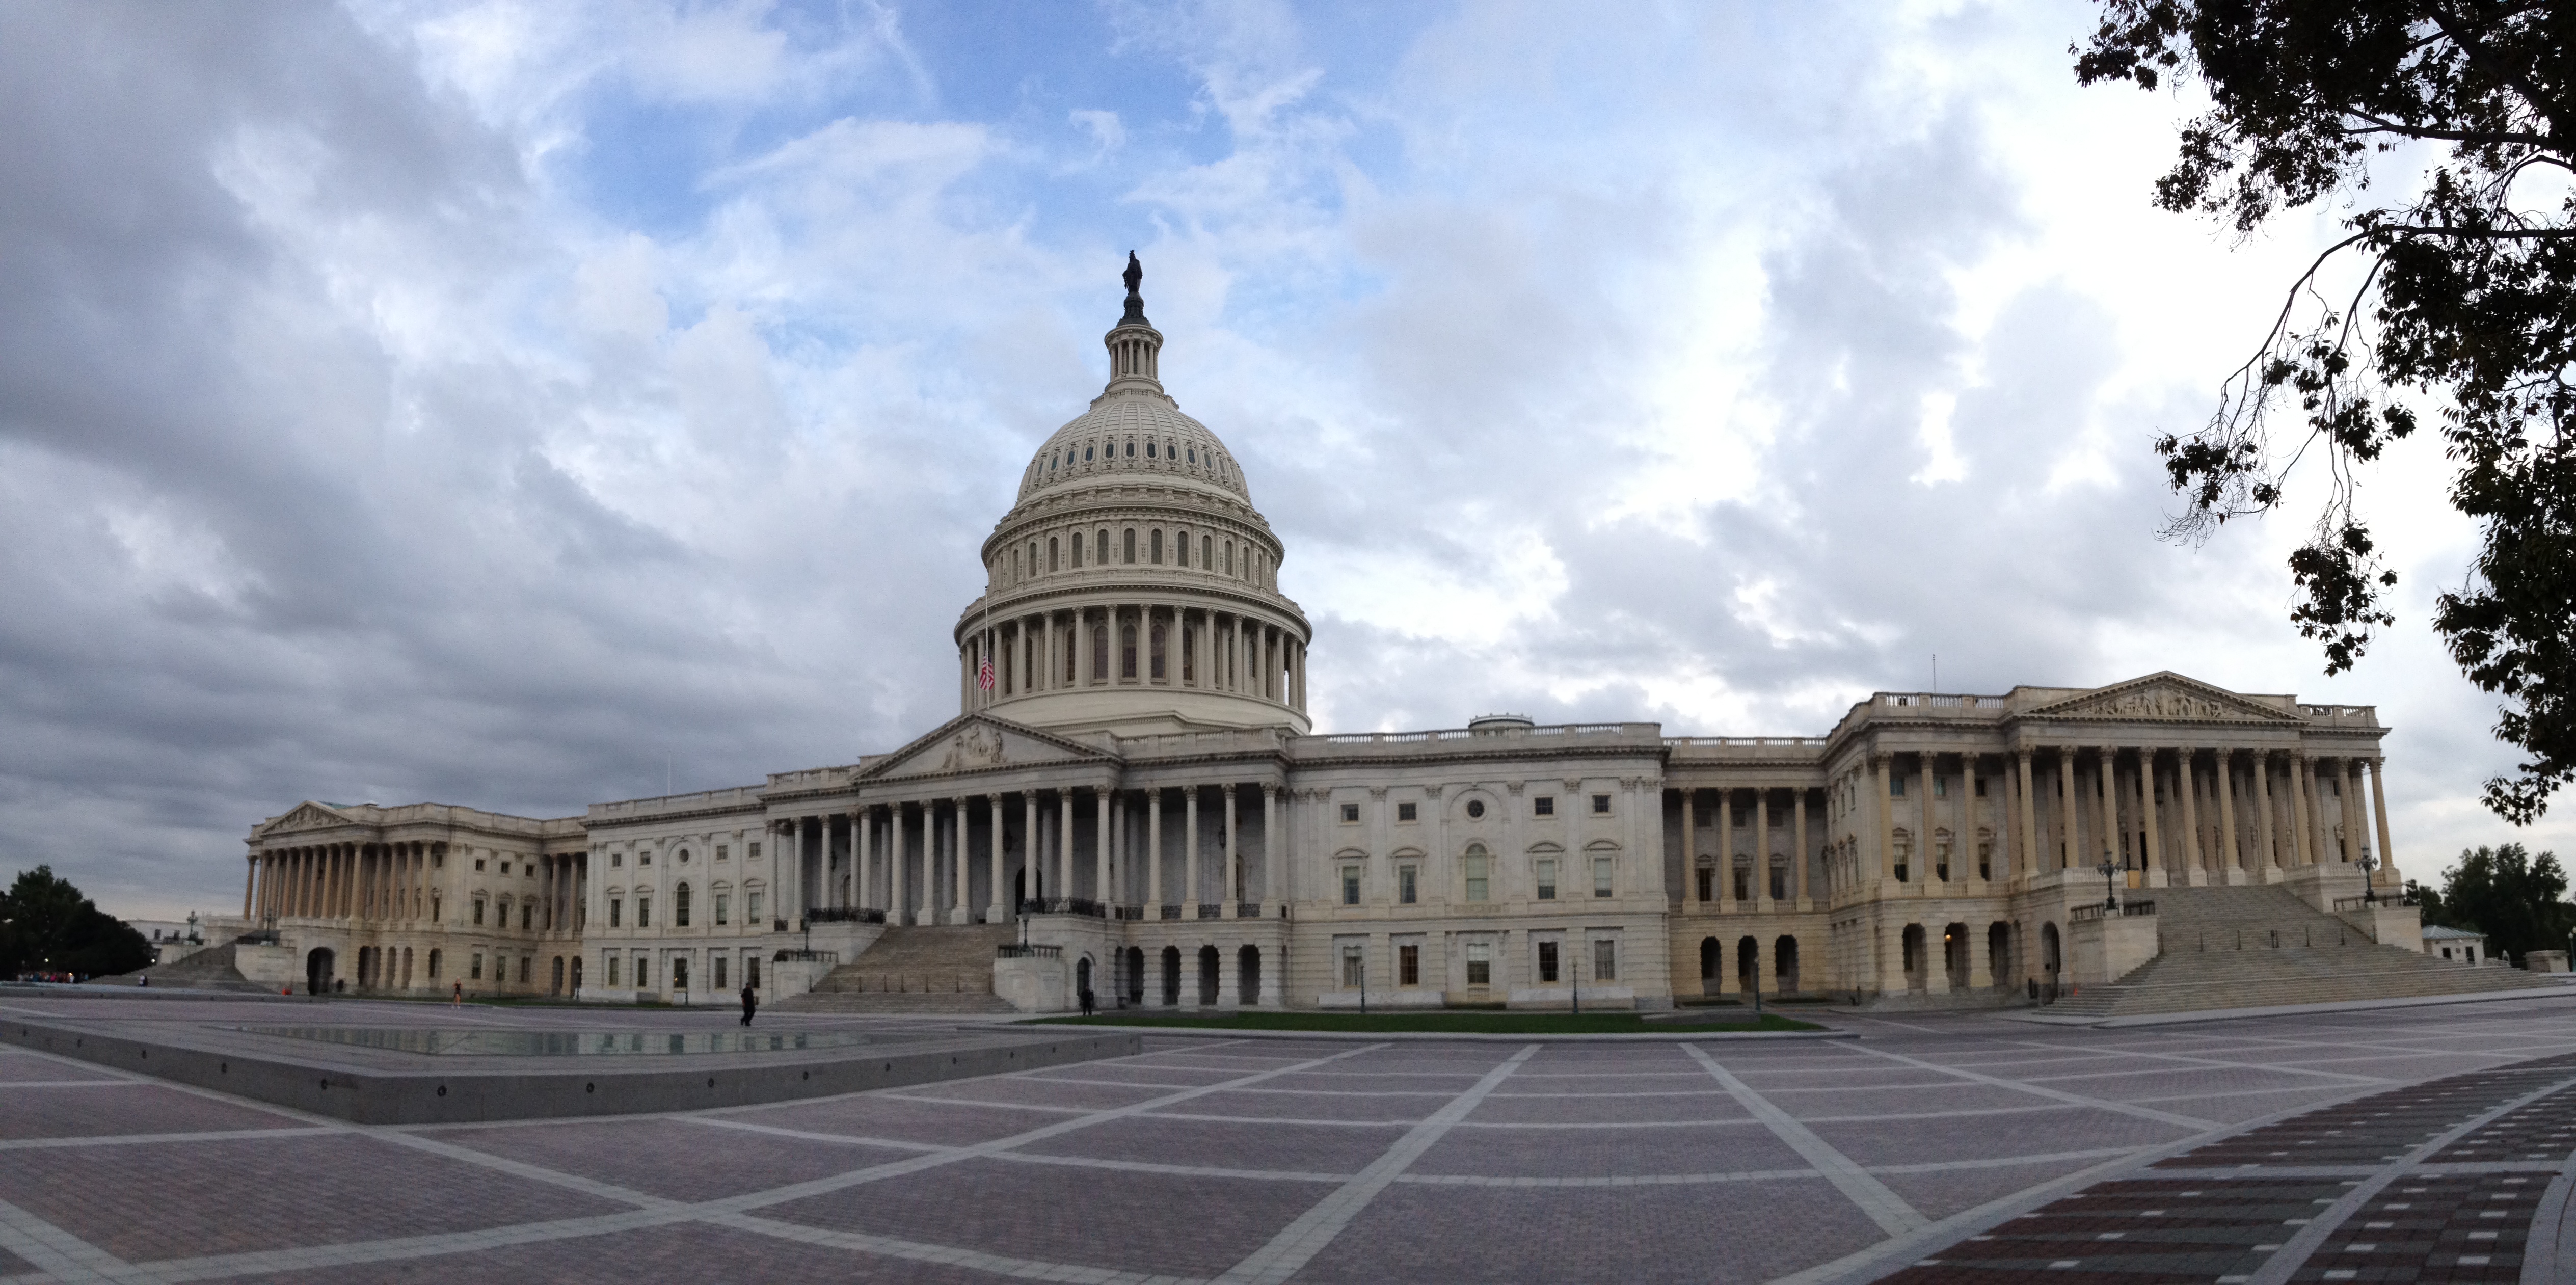 The Capitol building, Washington DC